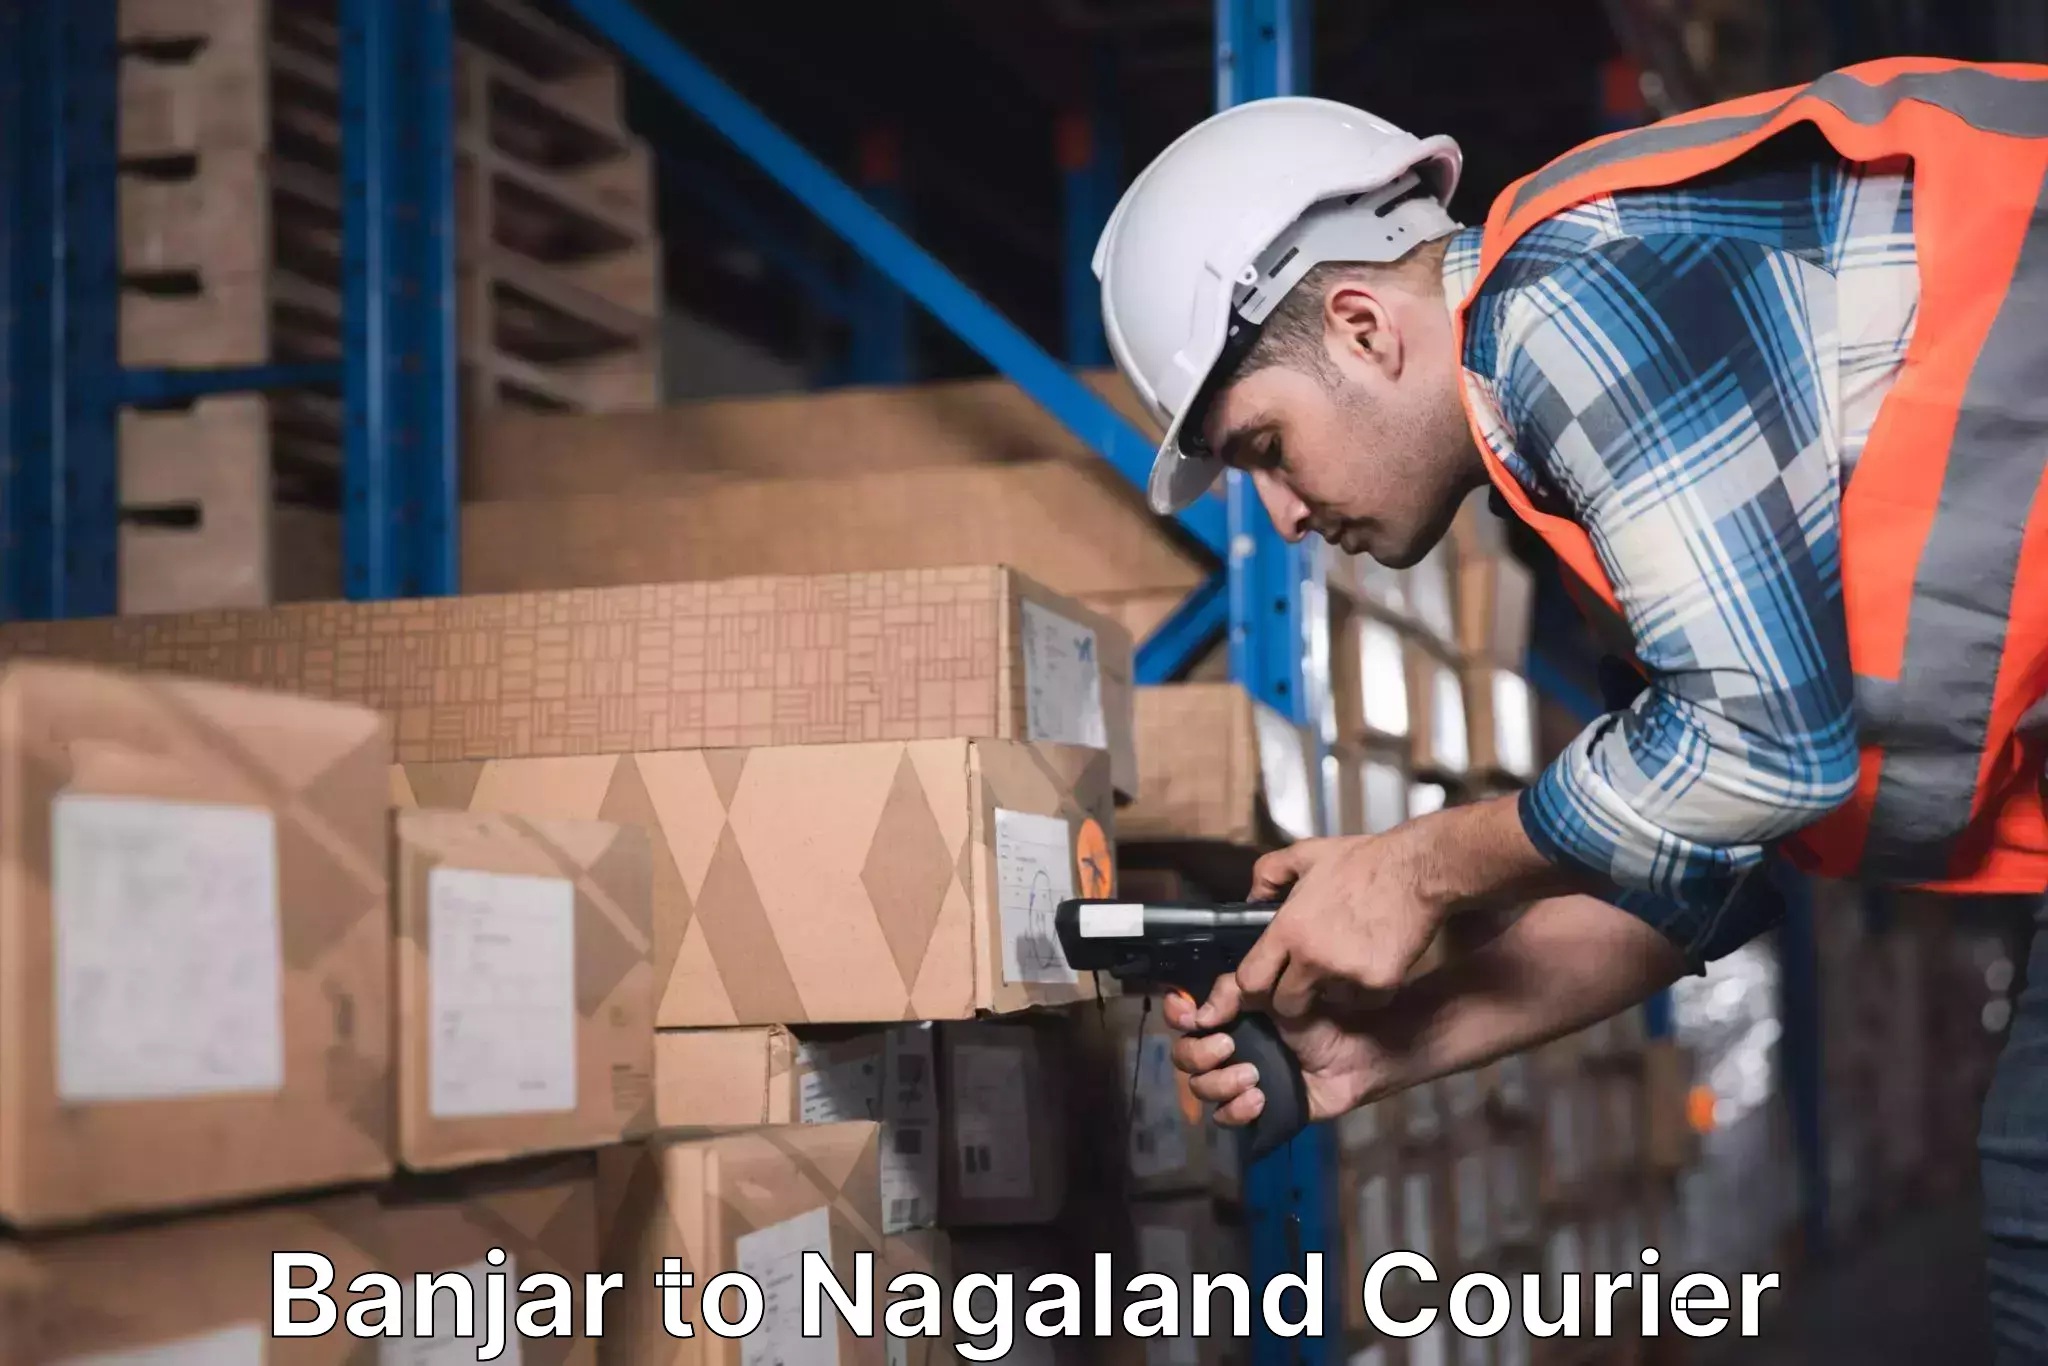 High-speed parcel service Banjar to Nagaland